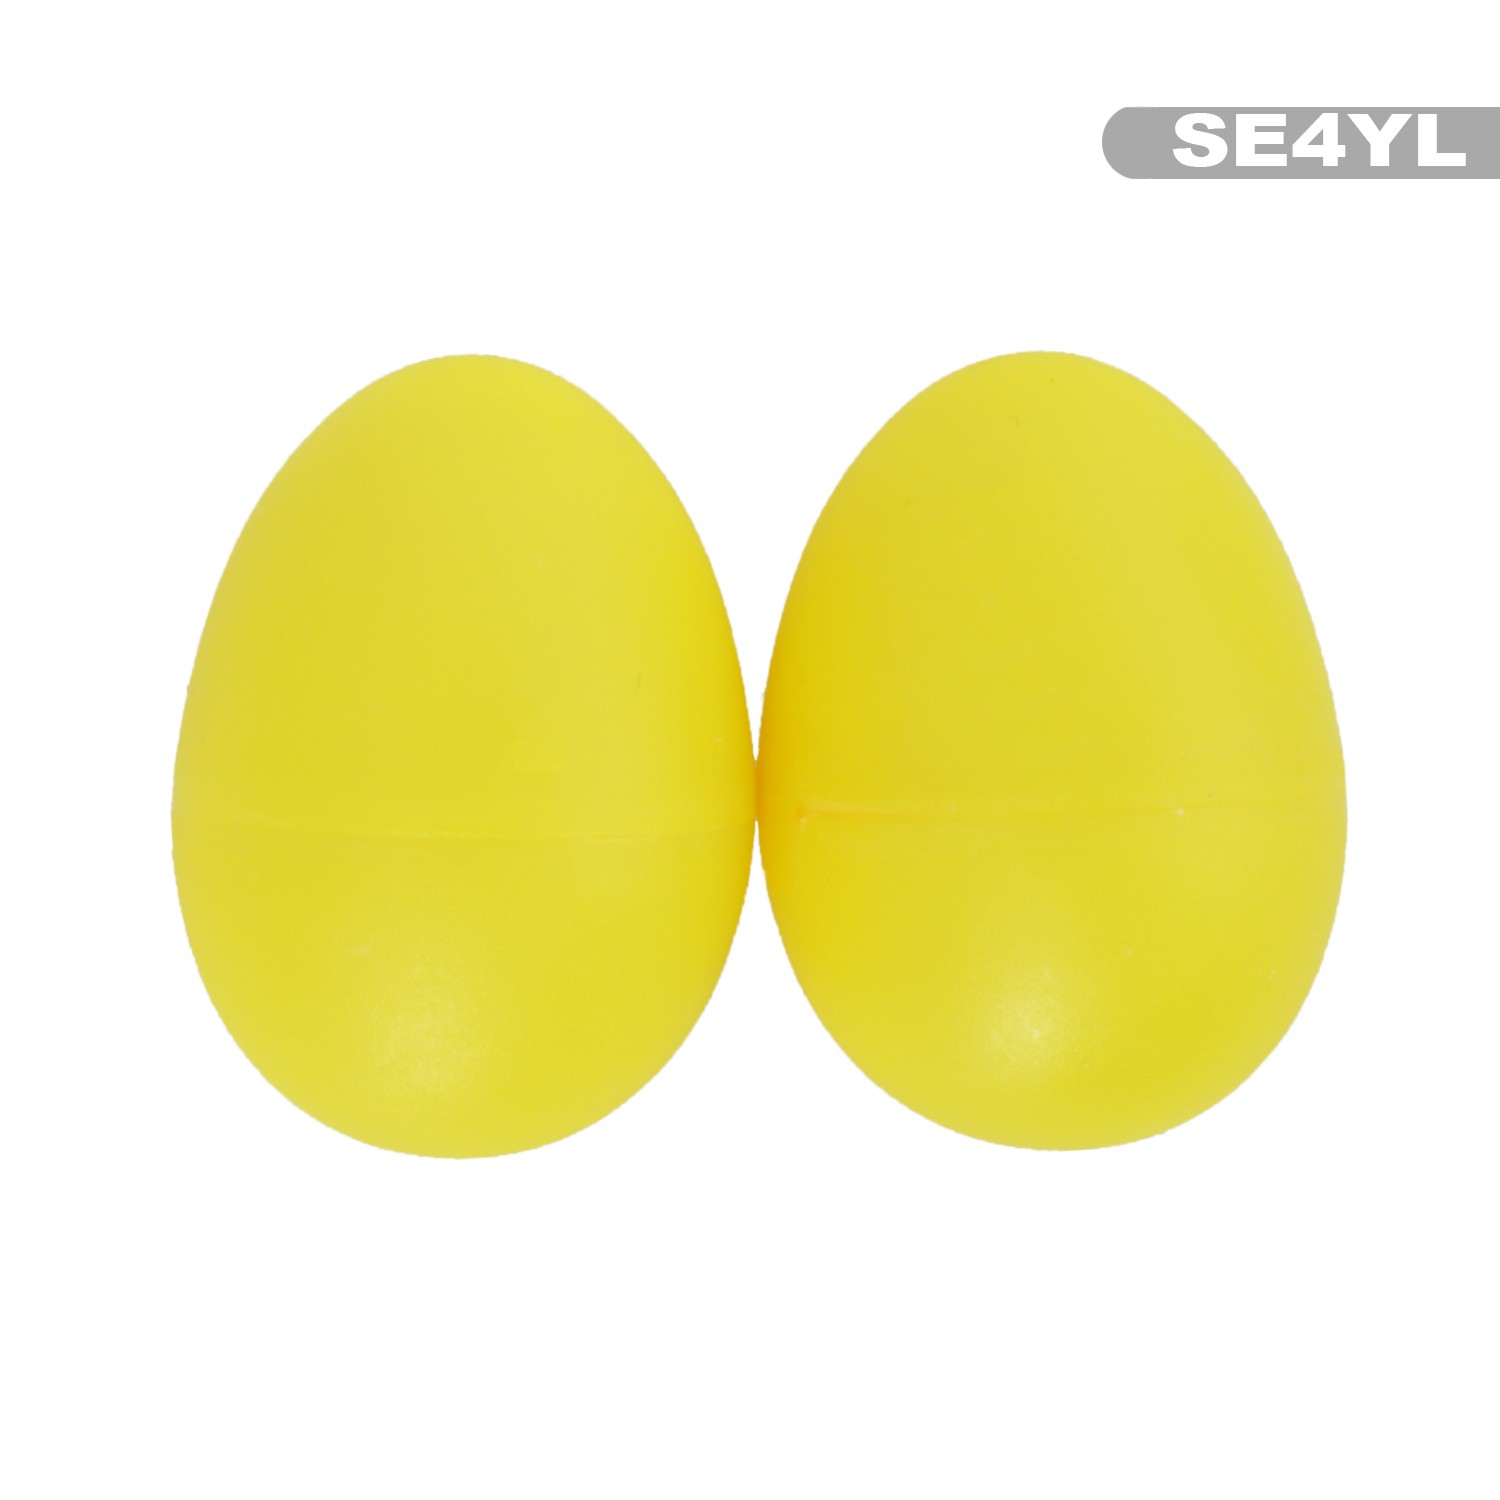 Sound Egg SE4